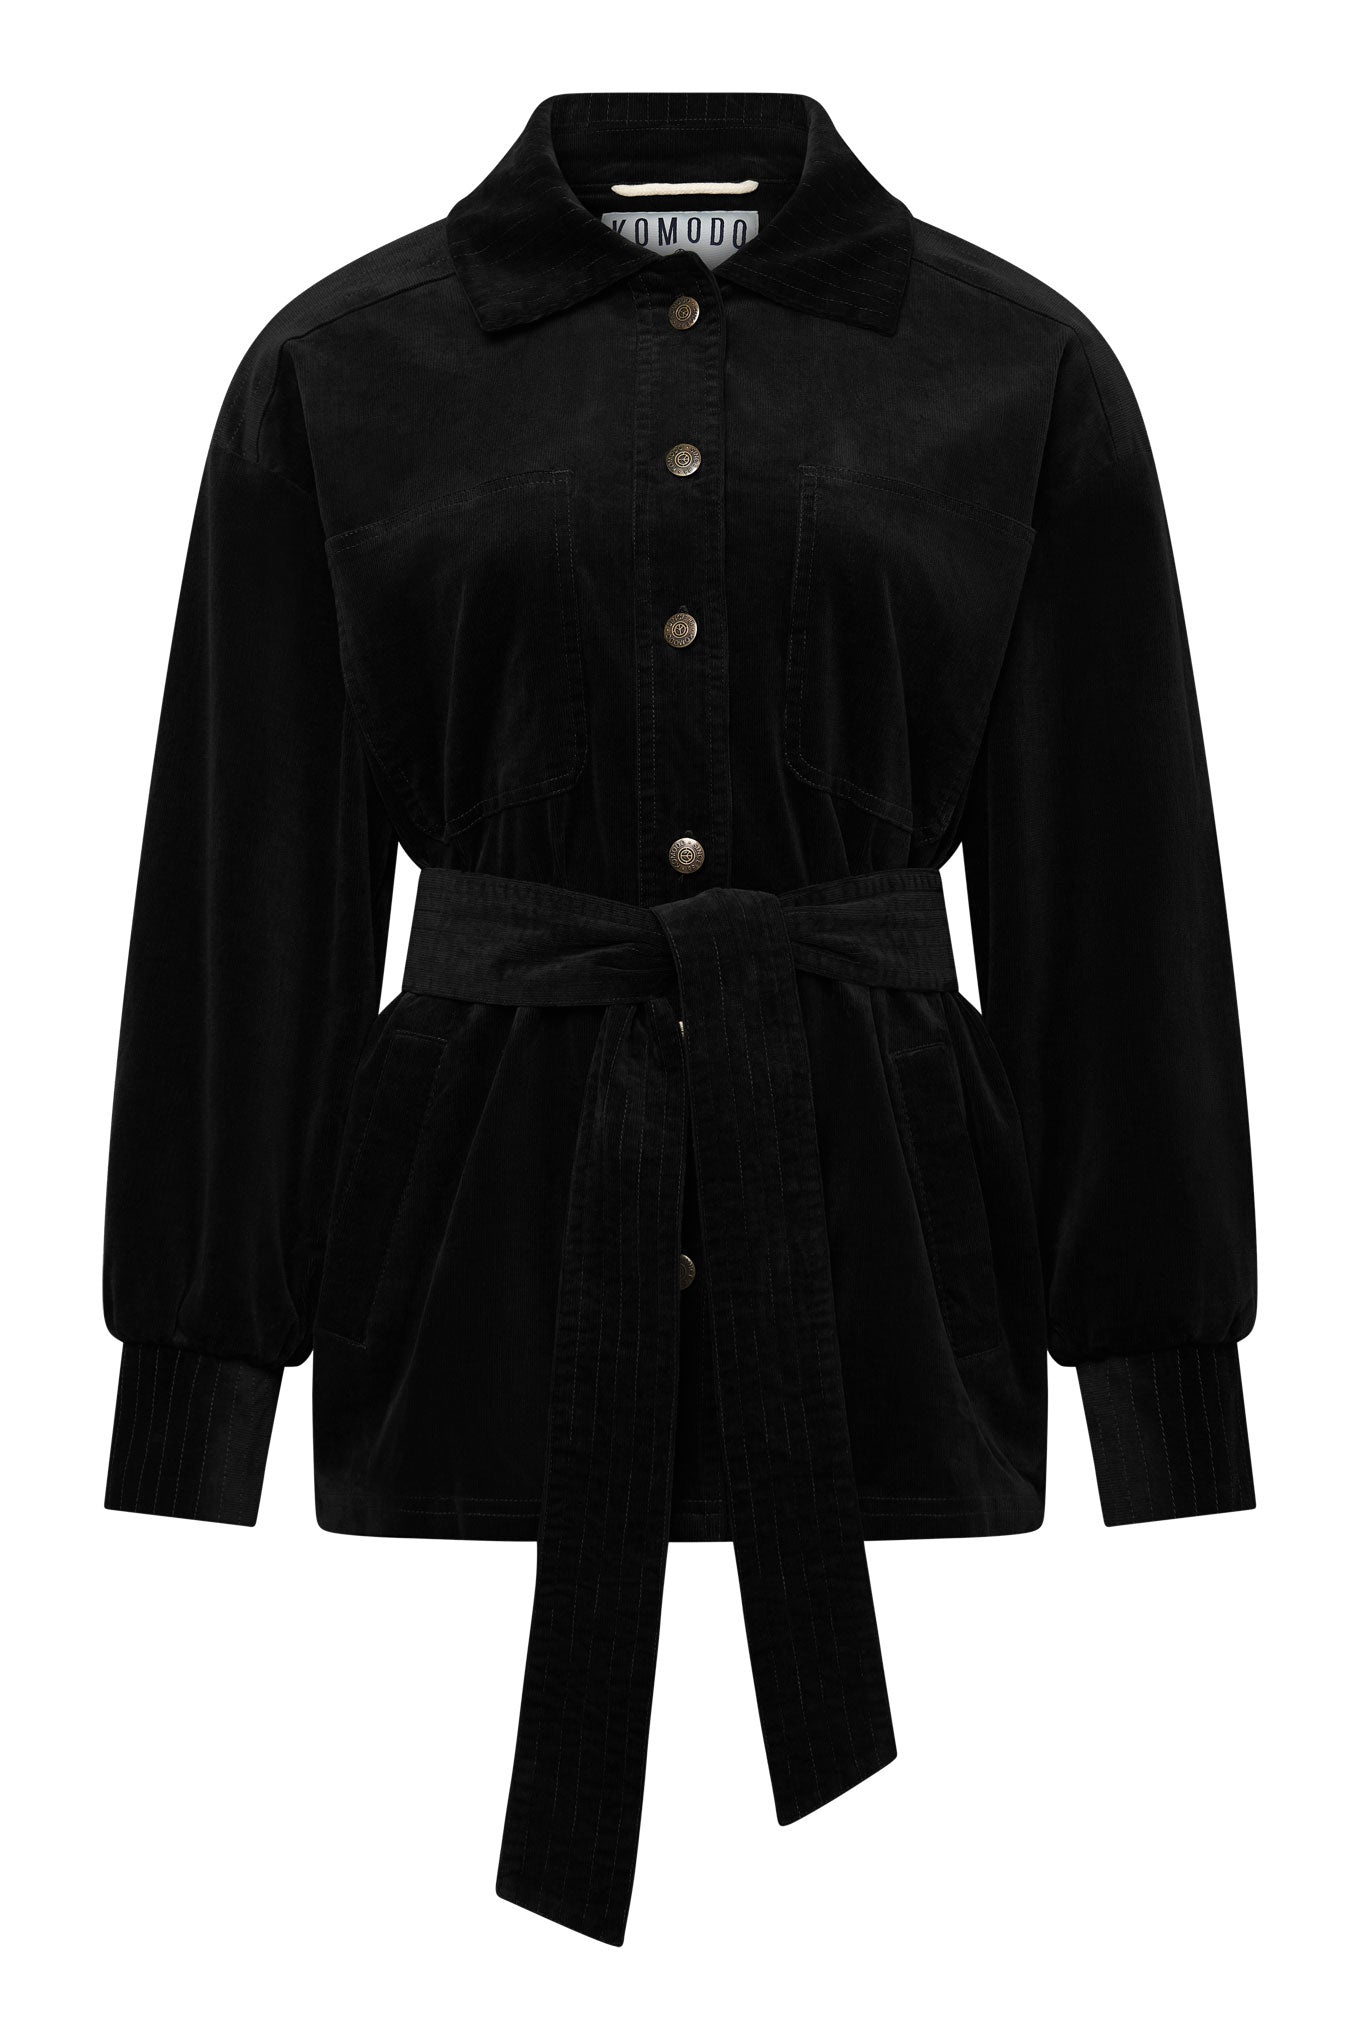 Black corduroy jacket APPOLINO made from 100% organic cotton from Komodo